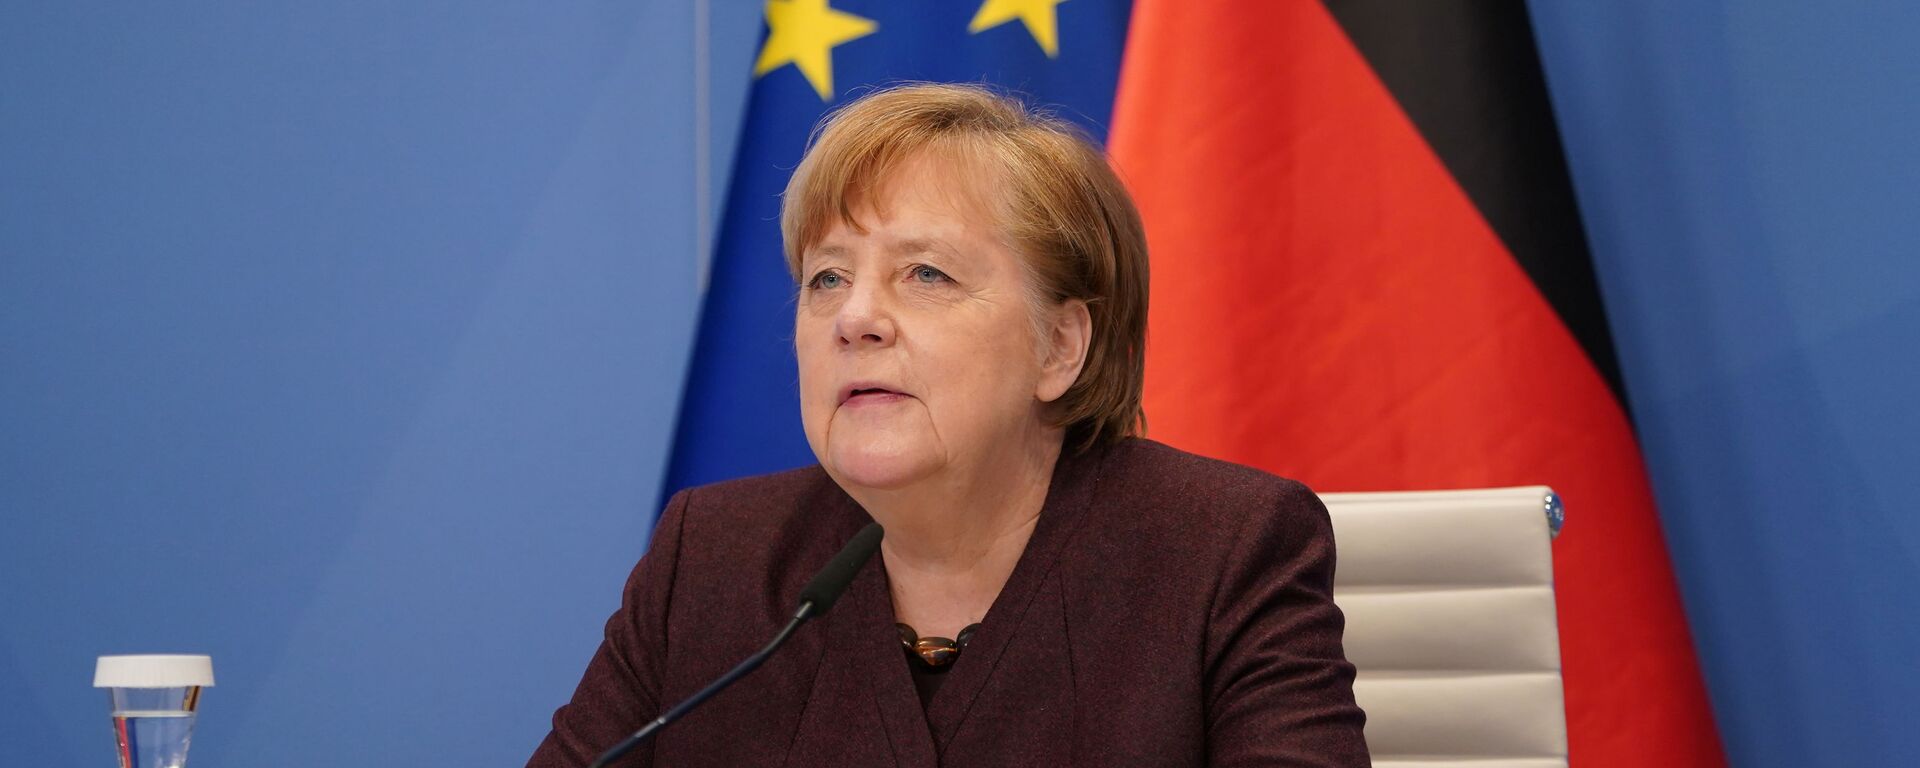 Angela Merkel, canciller alemana - Sputnik Mundo, 1920, 28.06.2021